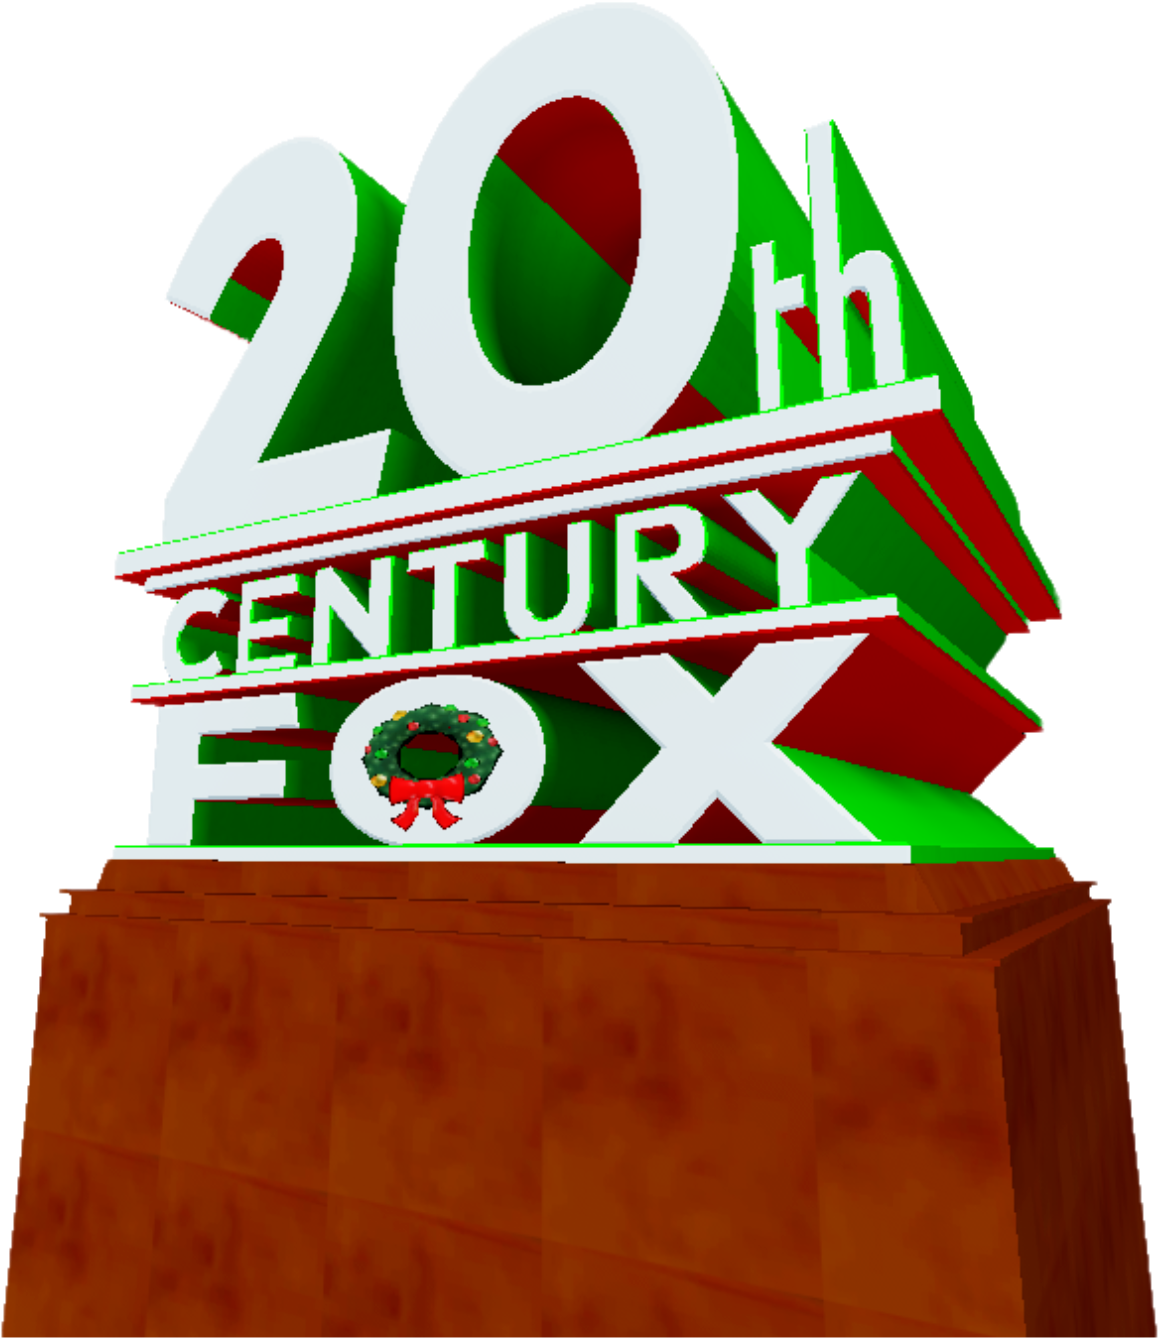 20th Century Fox Logo PNG HD Image